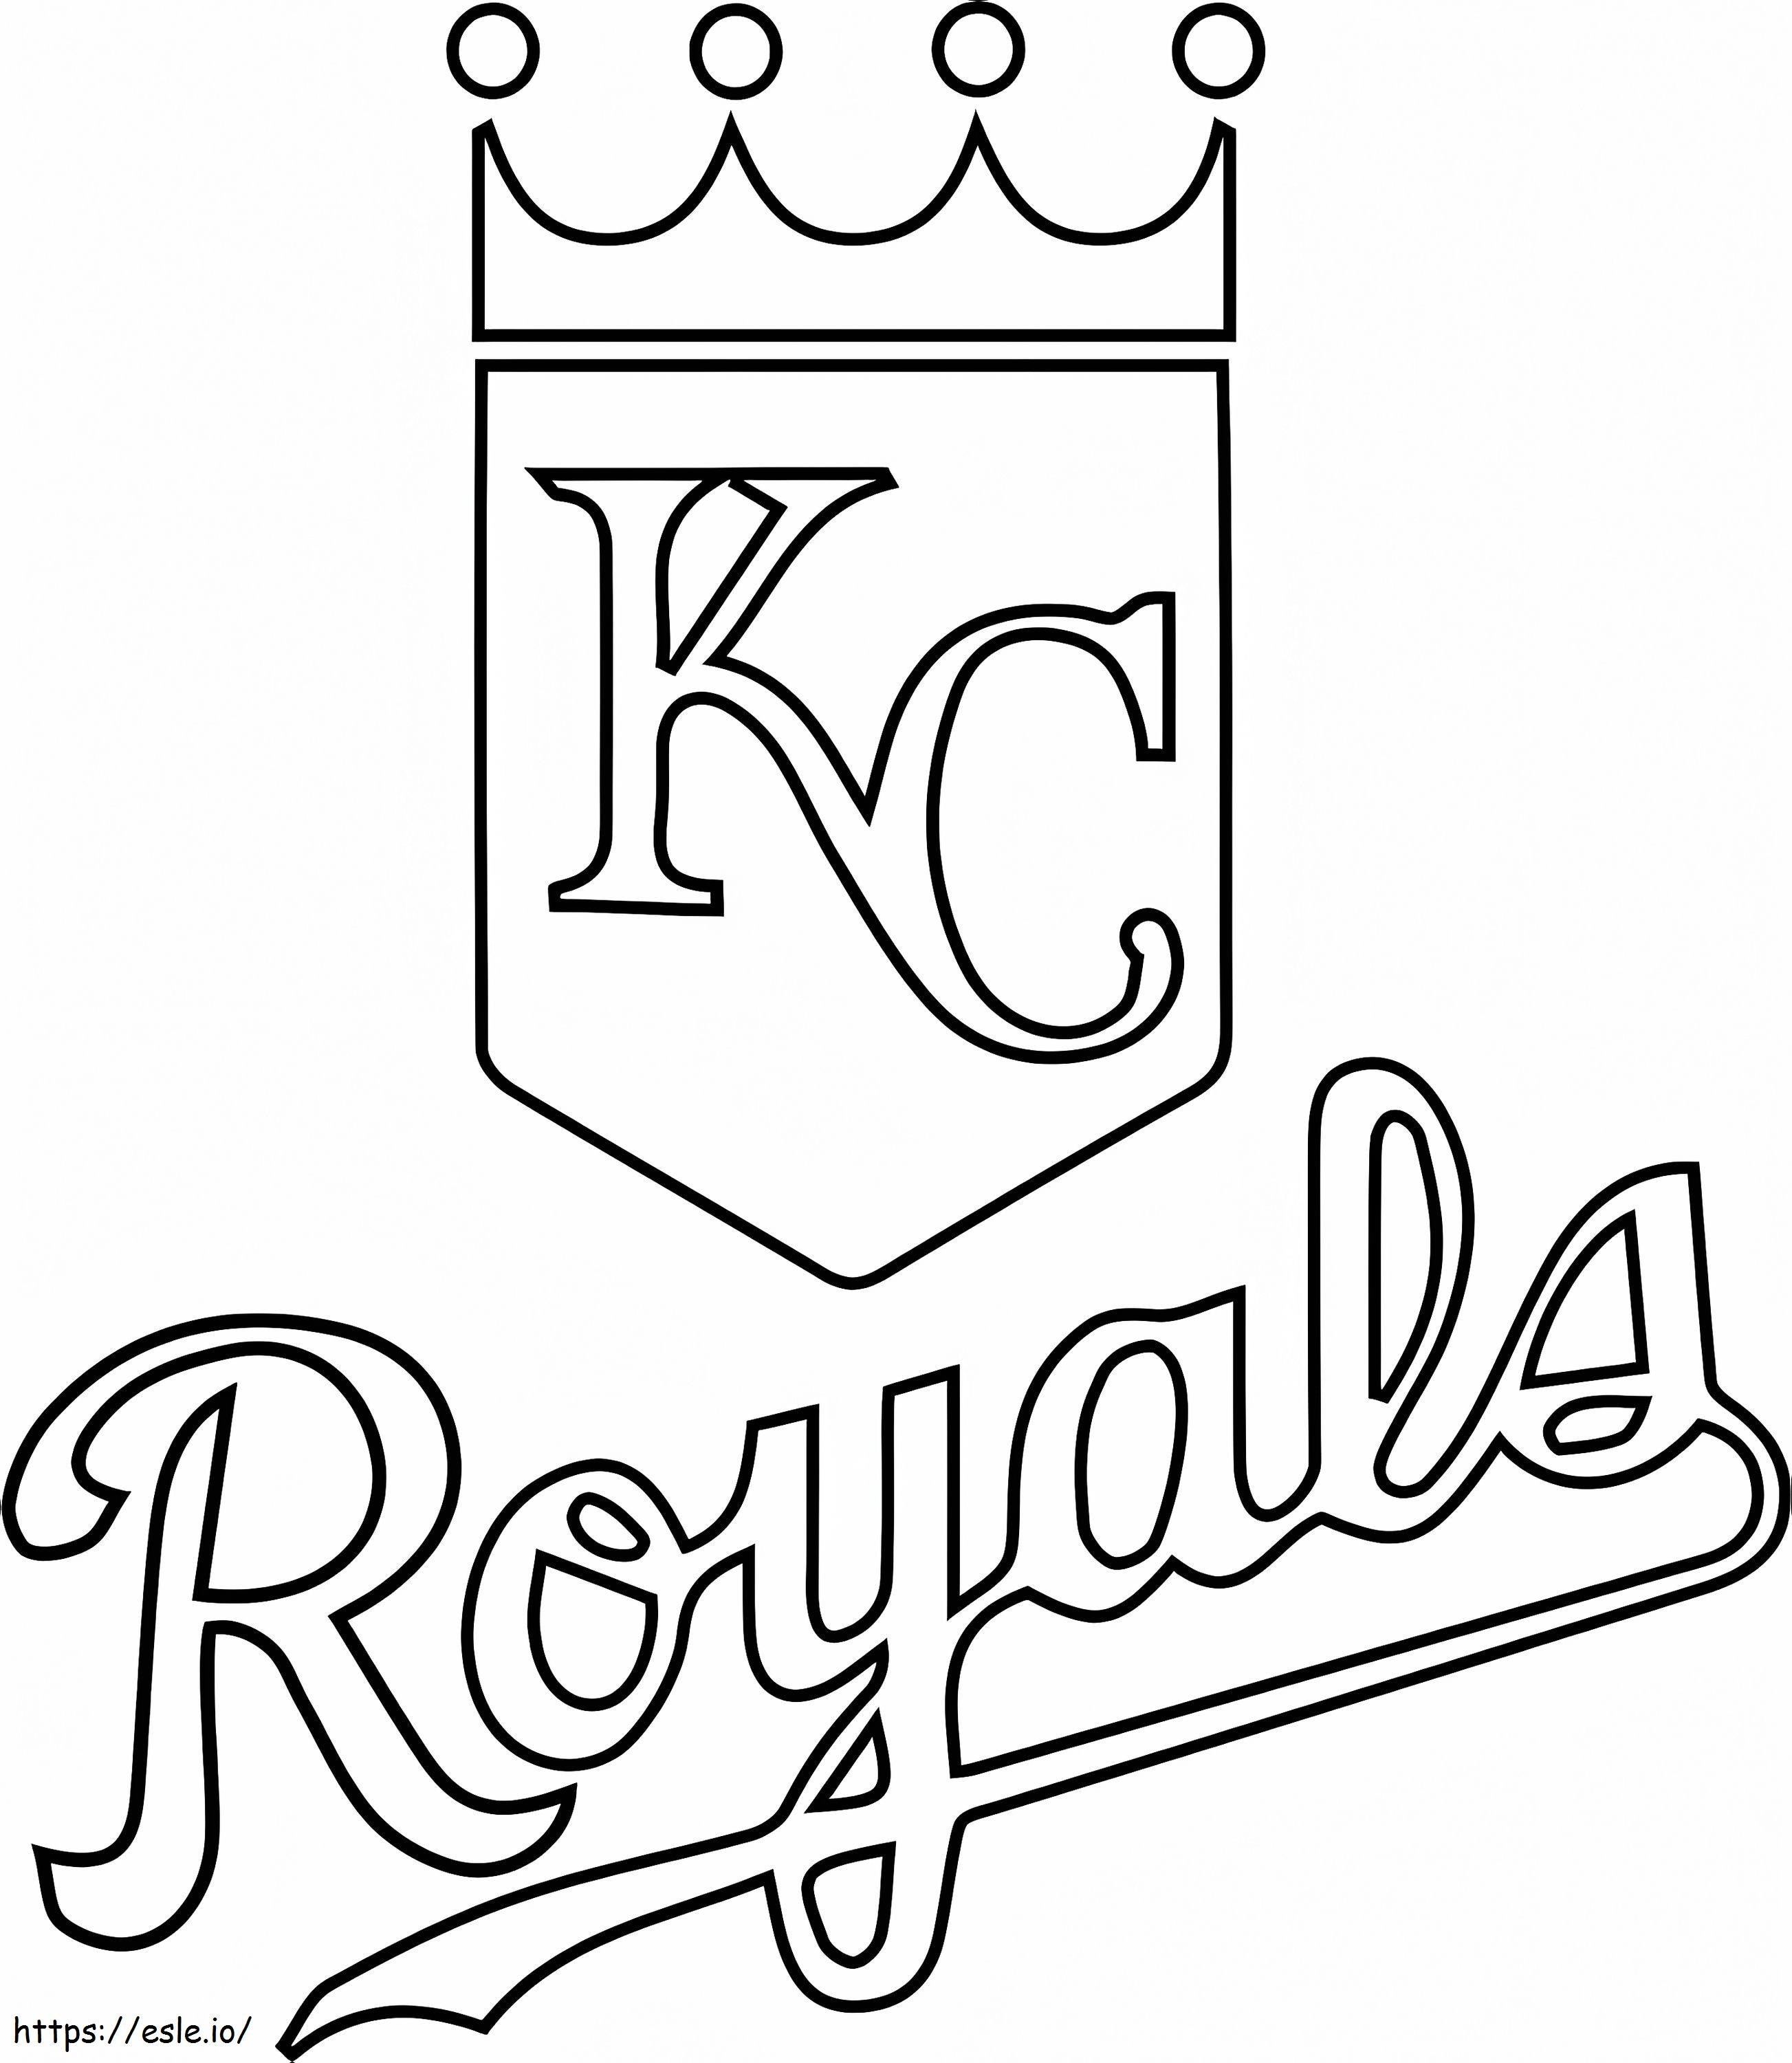 Logo der Kansas City Royals ausmalbilder